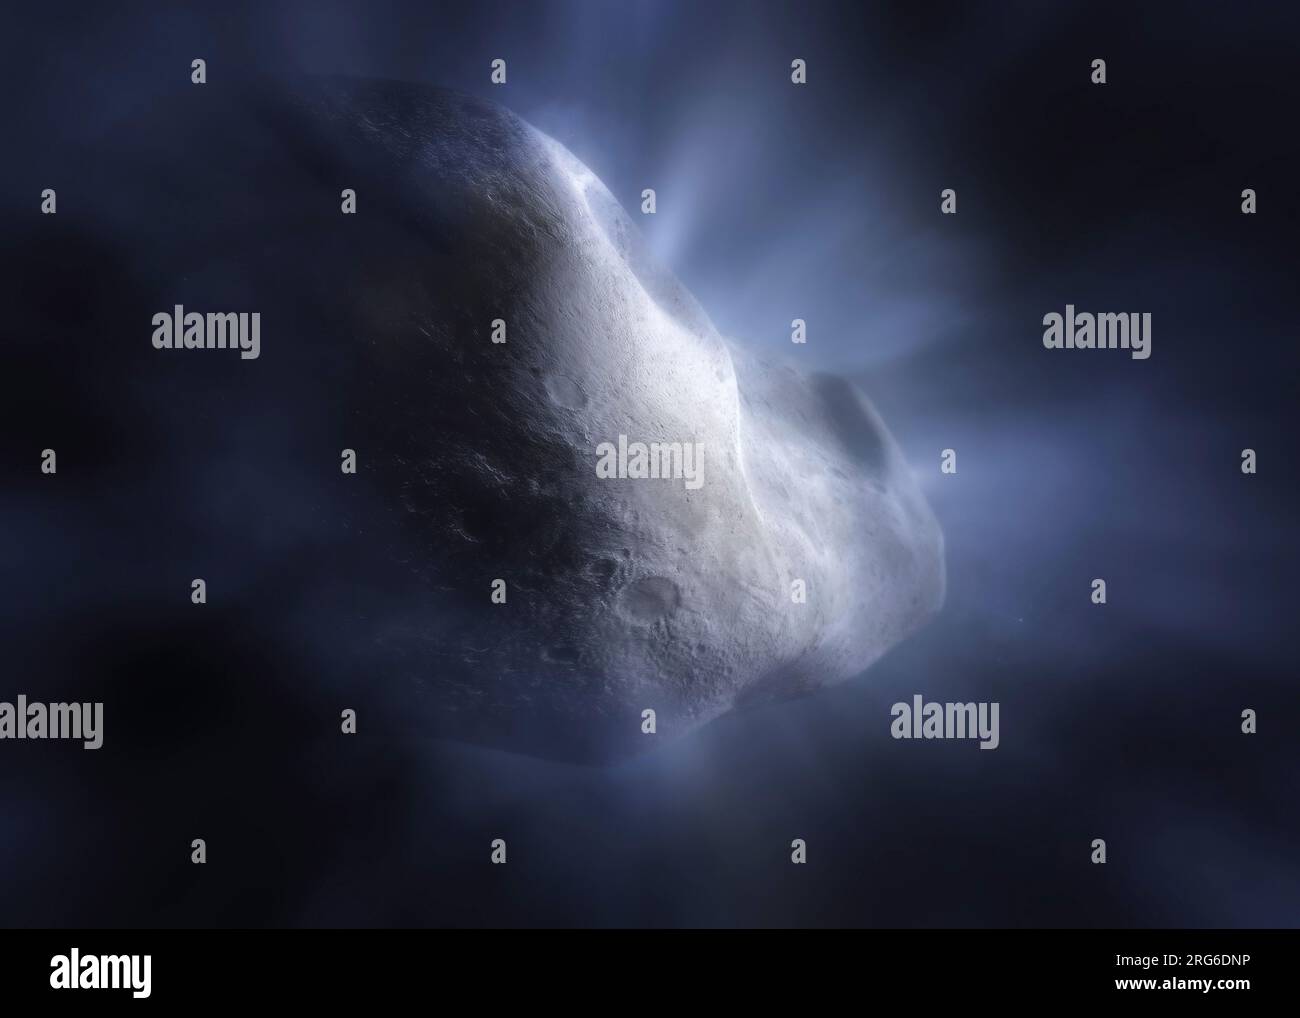 Vue en gros plan illustrative de la comète Tempel. Banque D'Images